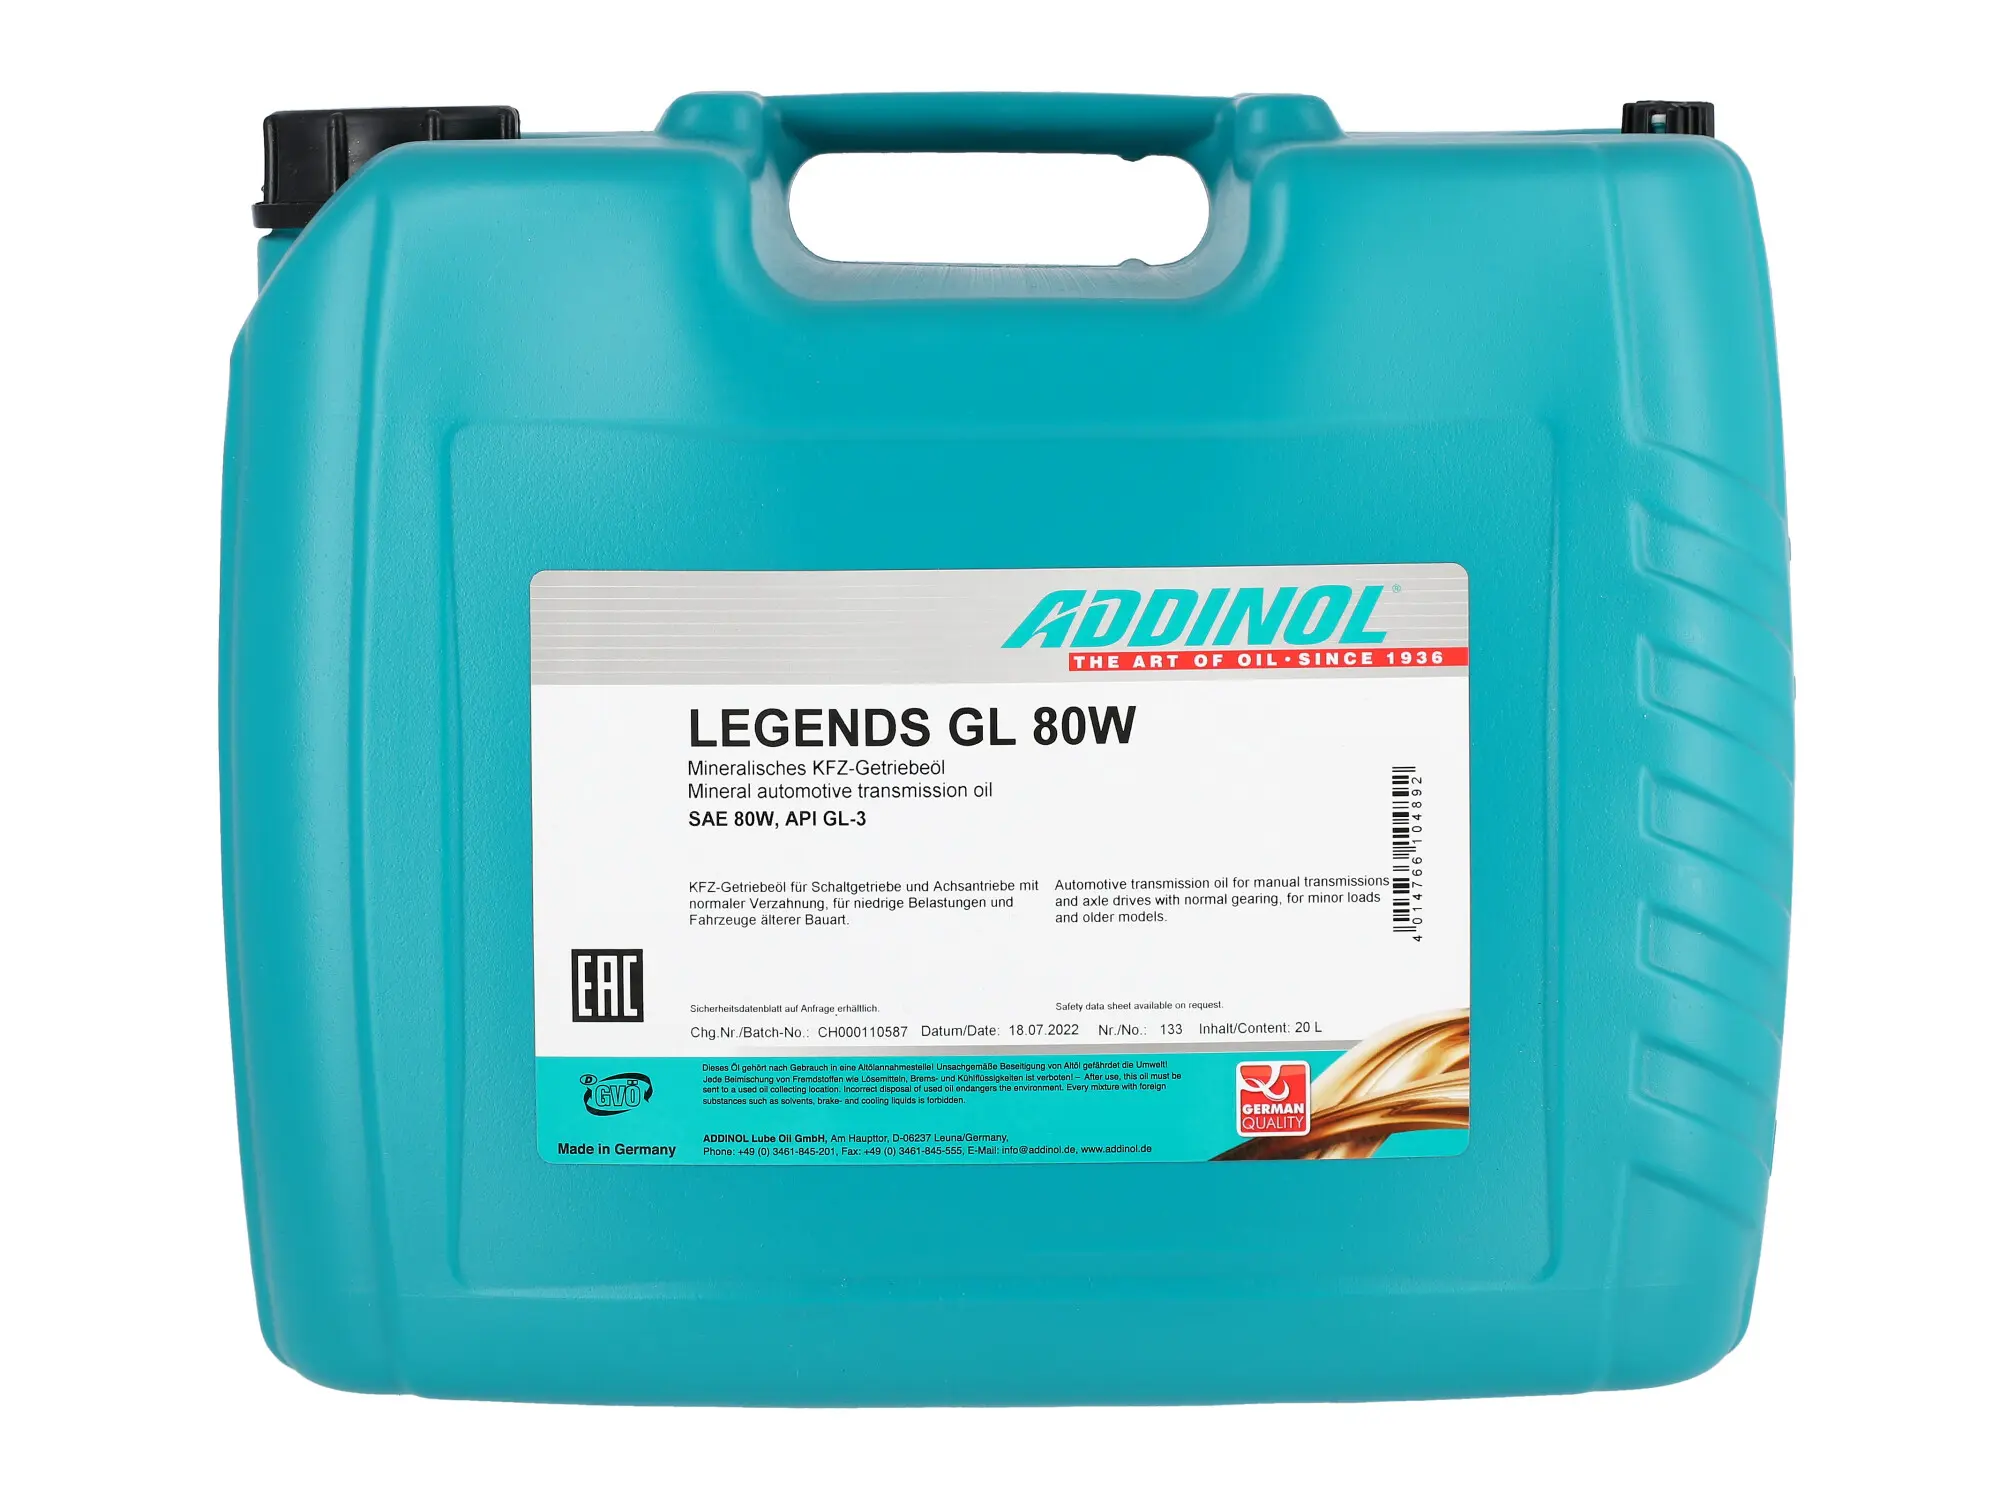 ADDINOL GL80W, Getriebeöl mineralisch (API GL3) für Simson & MZ - 20l, Art.-Nr.: 10003079 - Bild 1